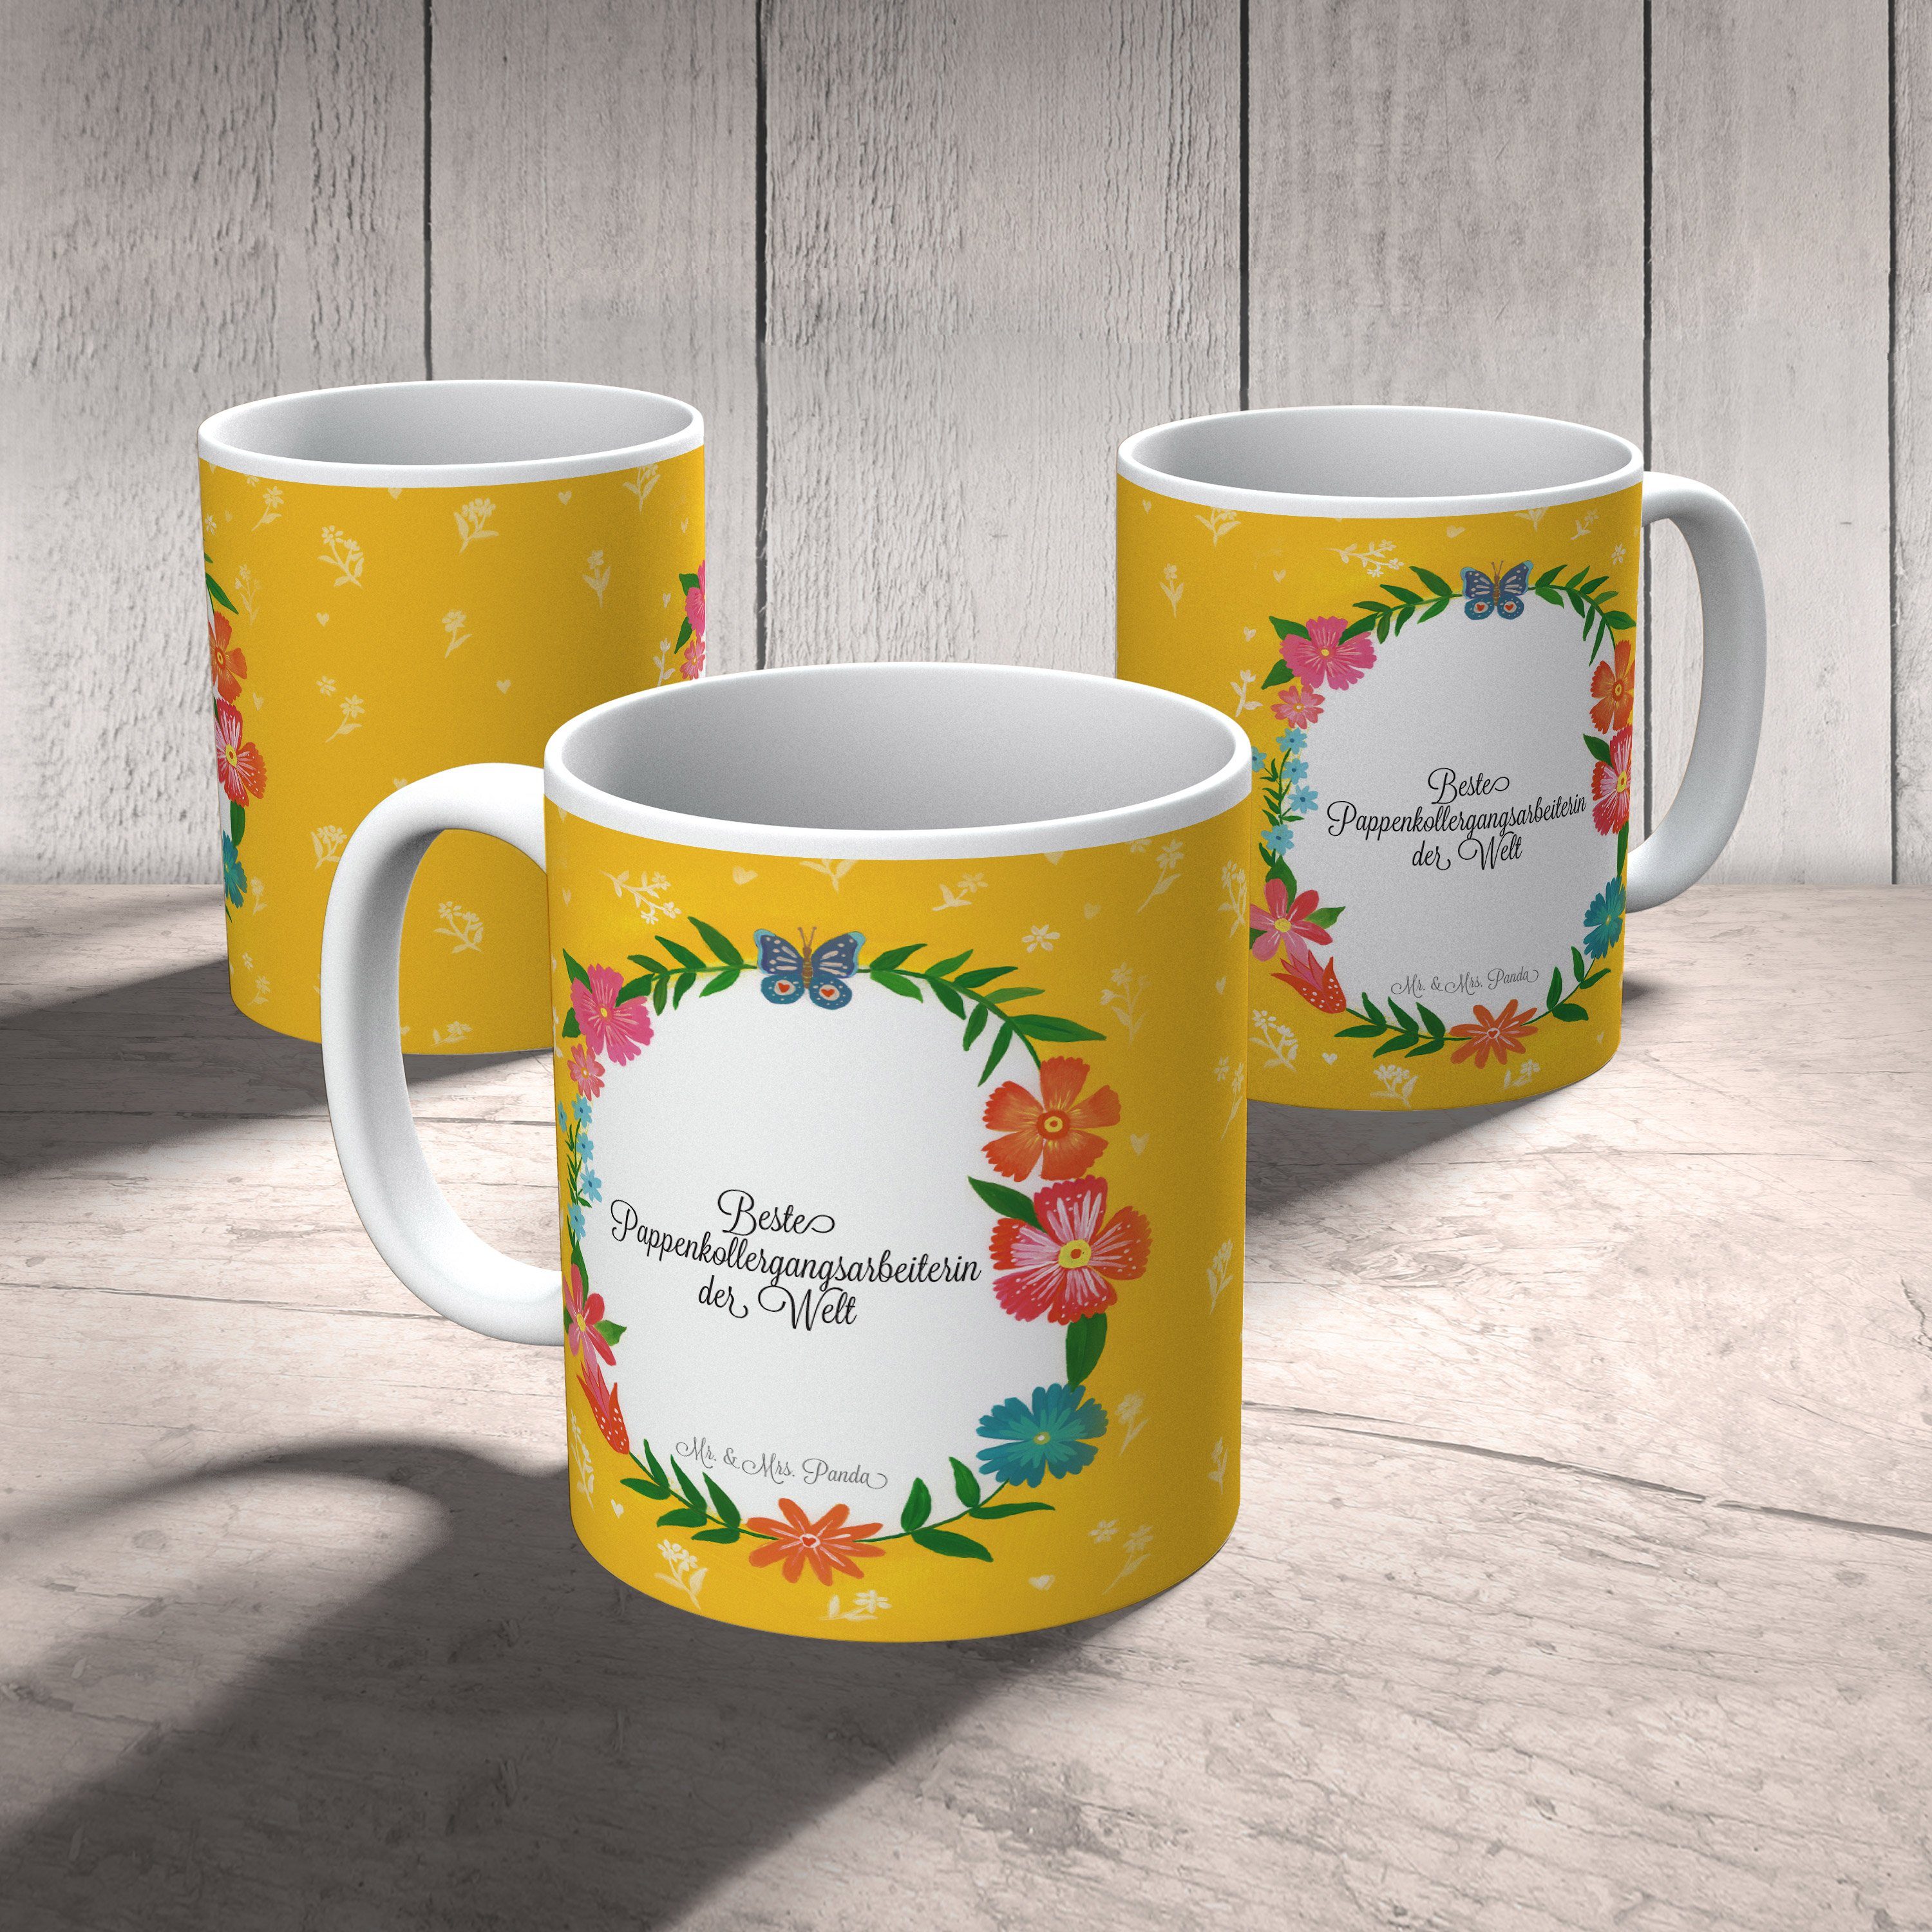 Mr. & Mrs. Keramik - Geschenk, Panda Pappenkollergangsarbeiterin Tasse Ausbildung, Teetasse, M, Tasse